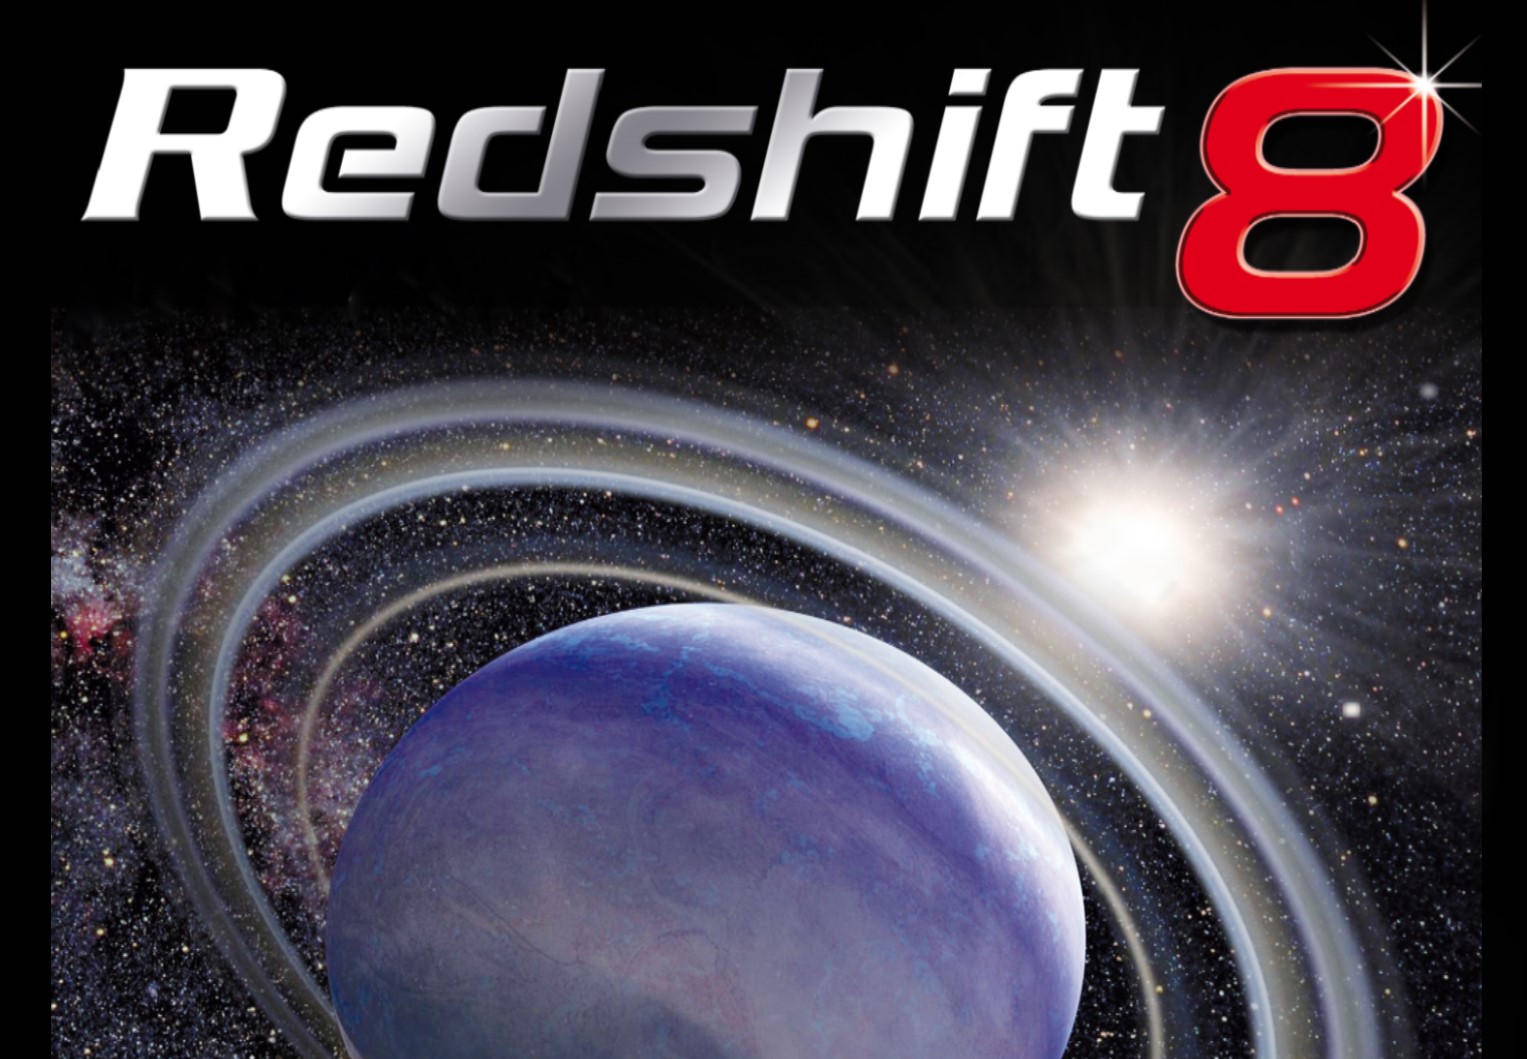 Redshift 8 CD Key